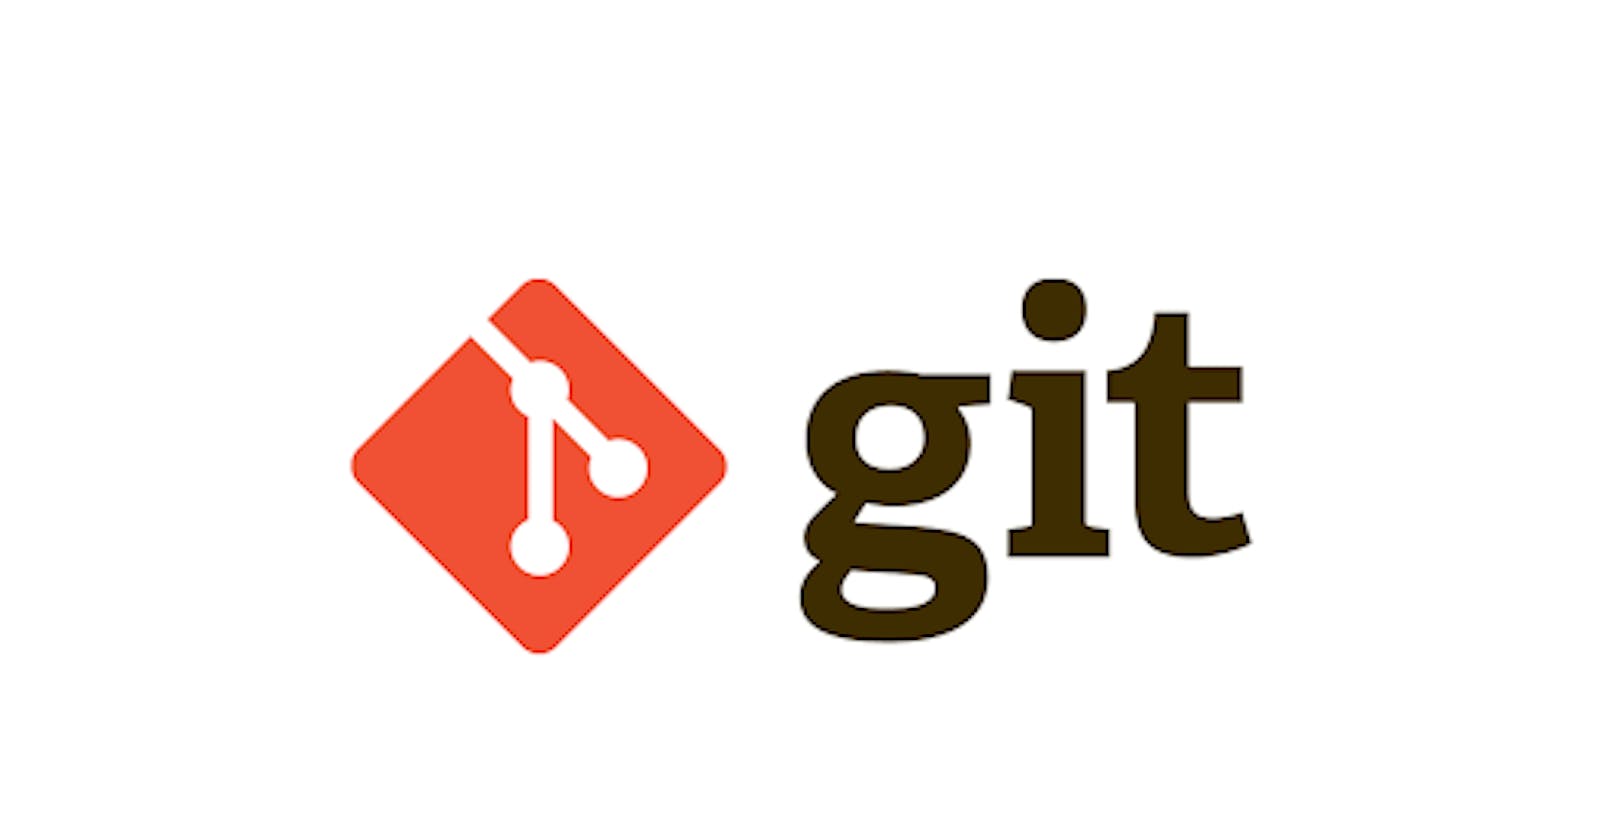 Git keywords every programmer should know